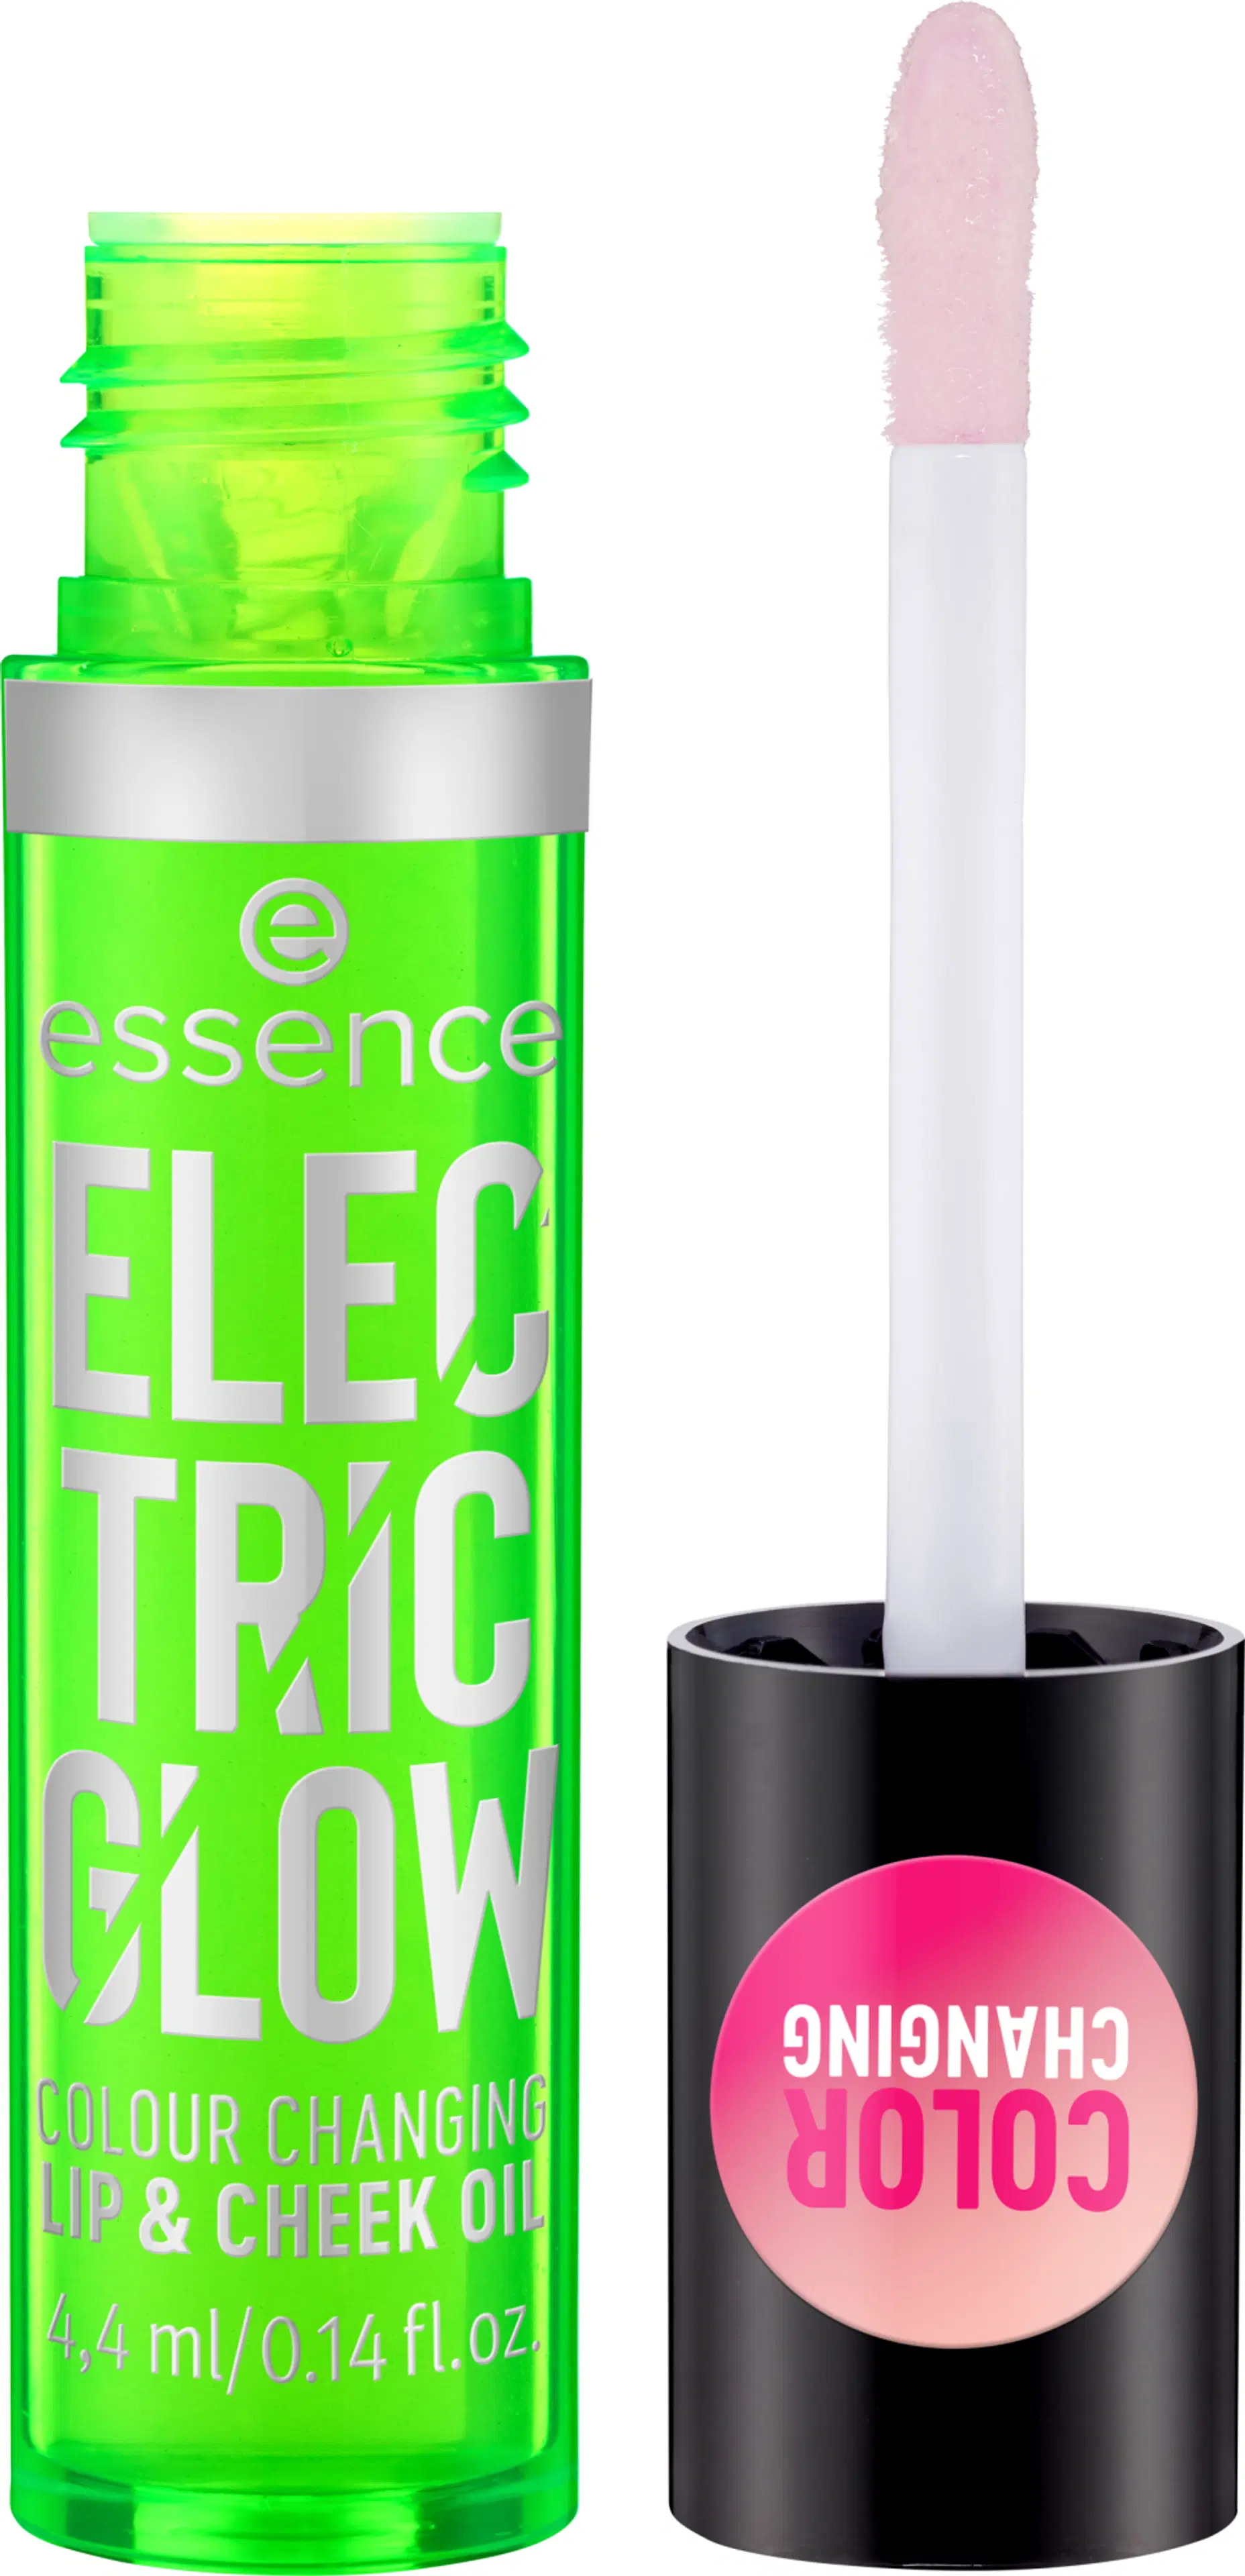 essence ELECTRIC GLOW COLOUR CHANGING LIP & CHEEK OIL väriä vaihtava huuli- ja poskiöljy 4,4 ml